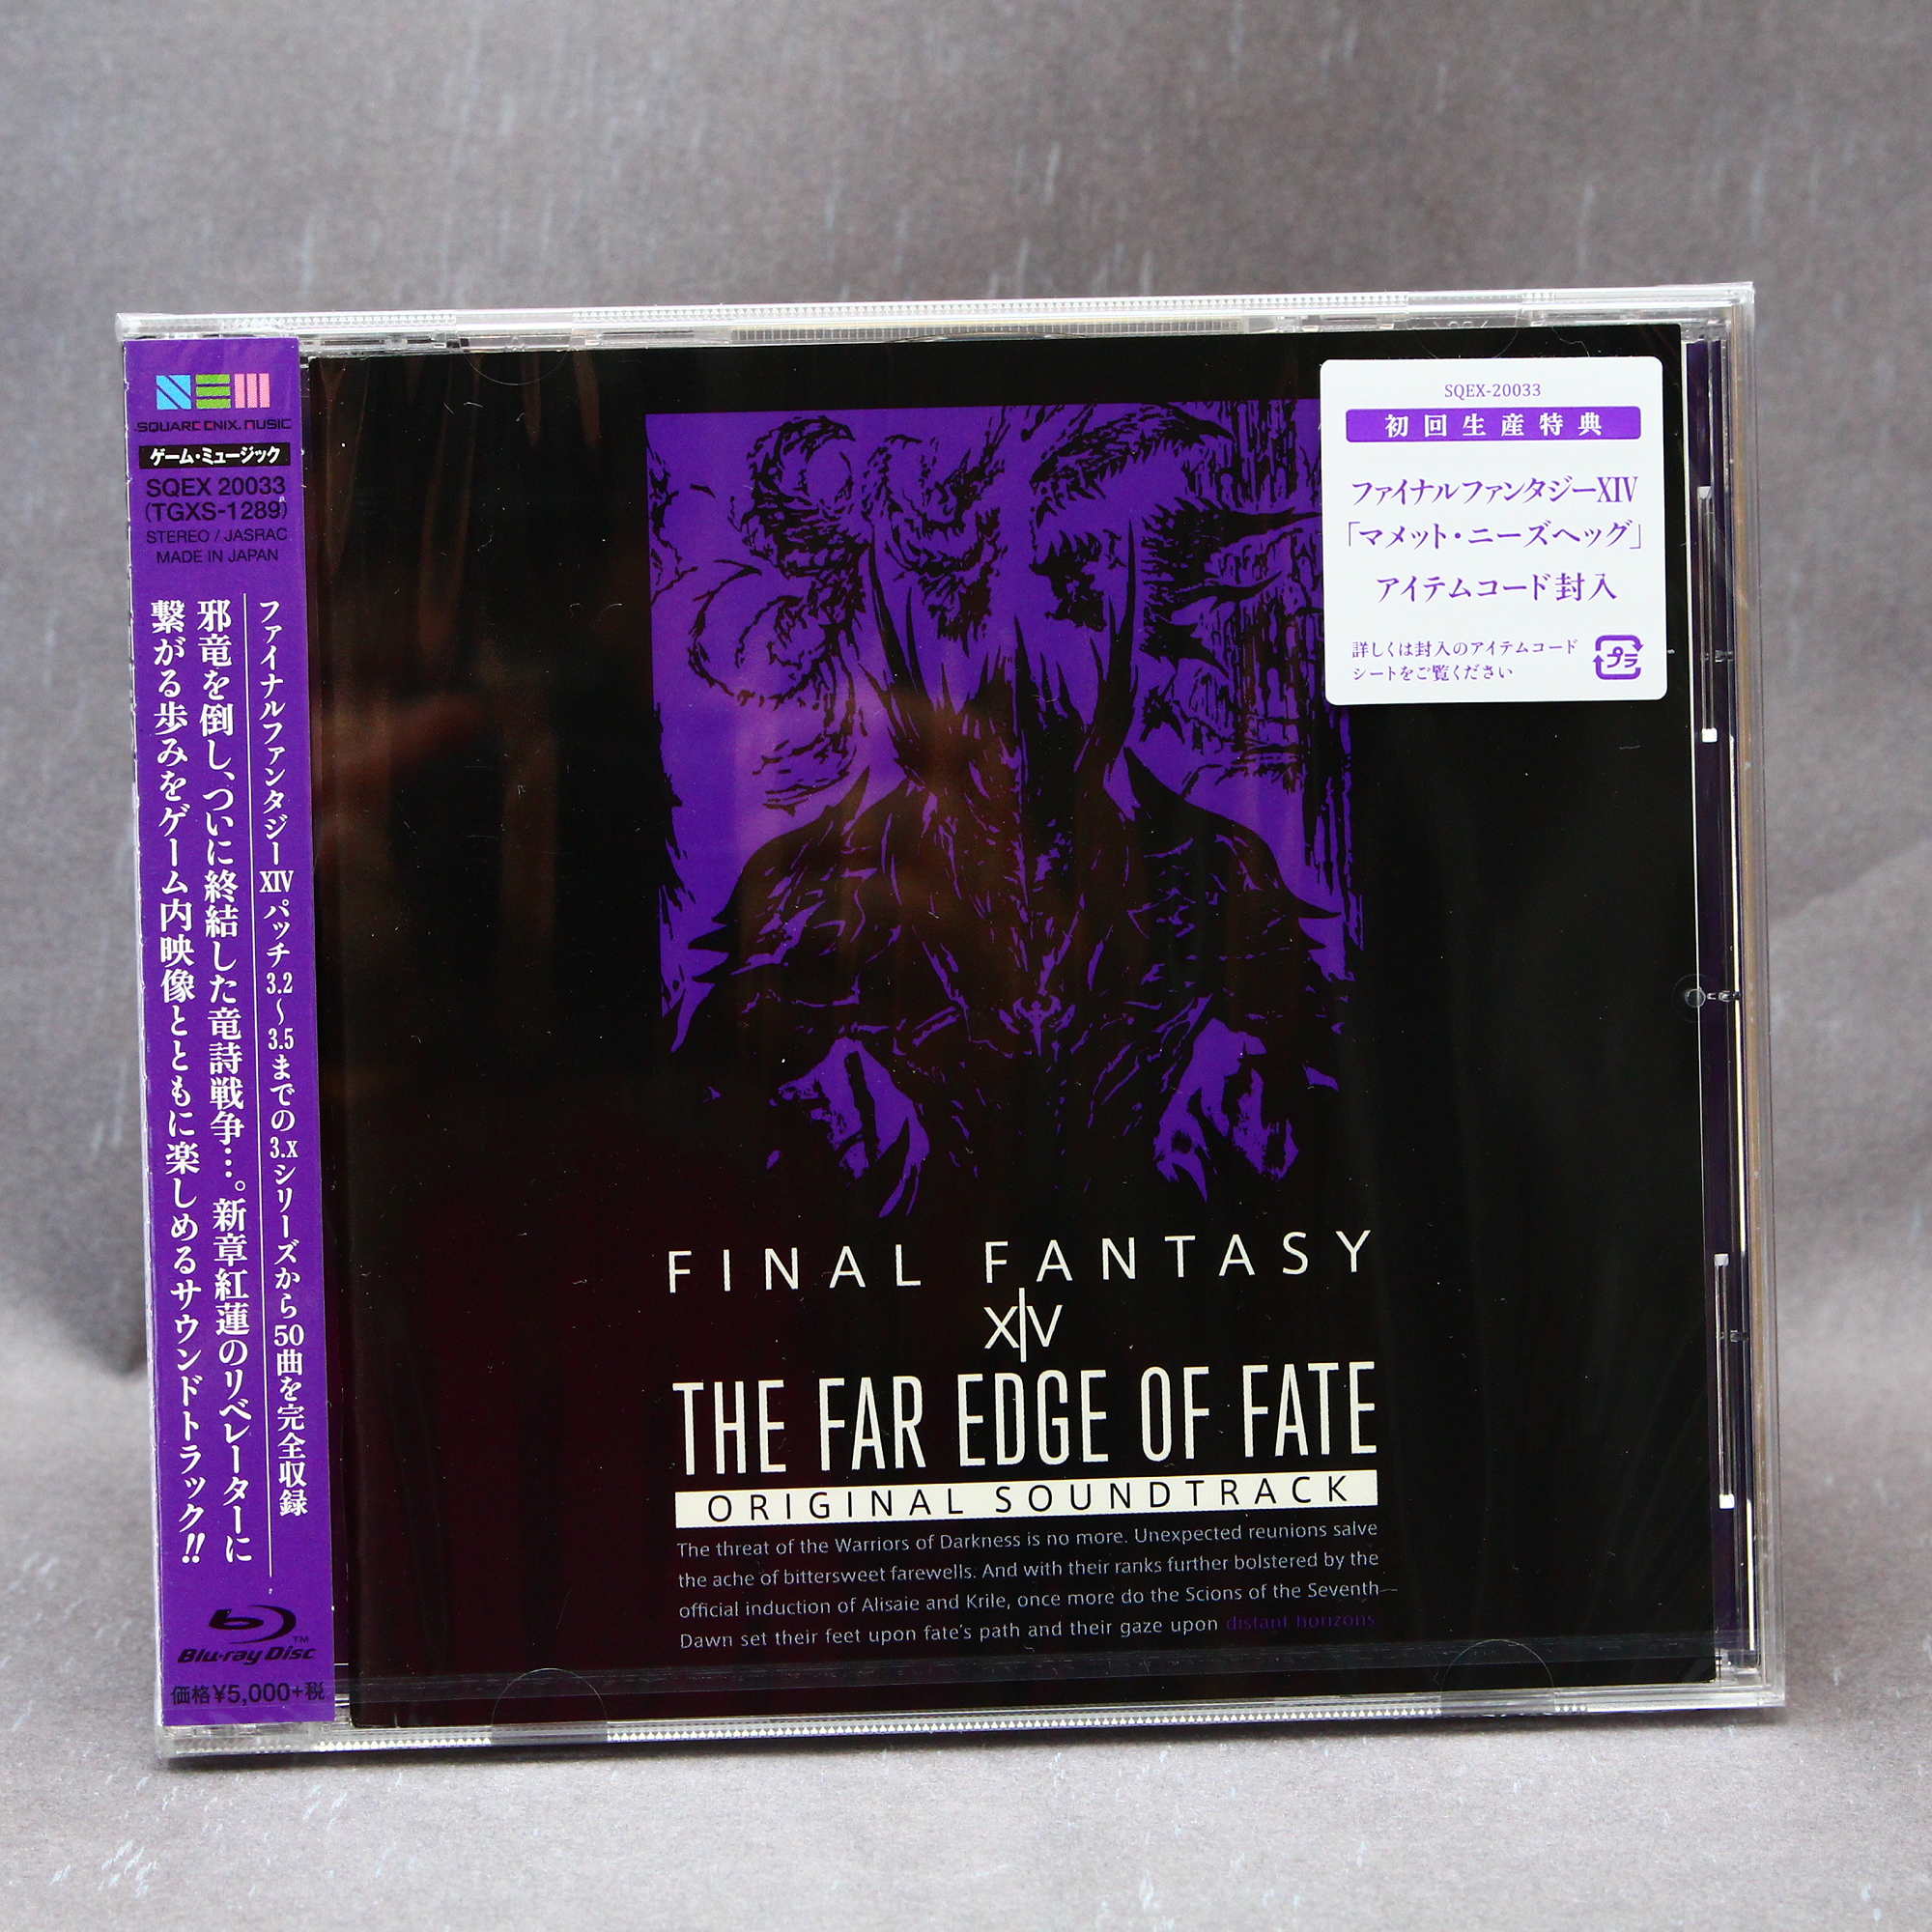 Final Fantasy Xiv Original Soundtrack The Far Edge Of Fate Uk 8761